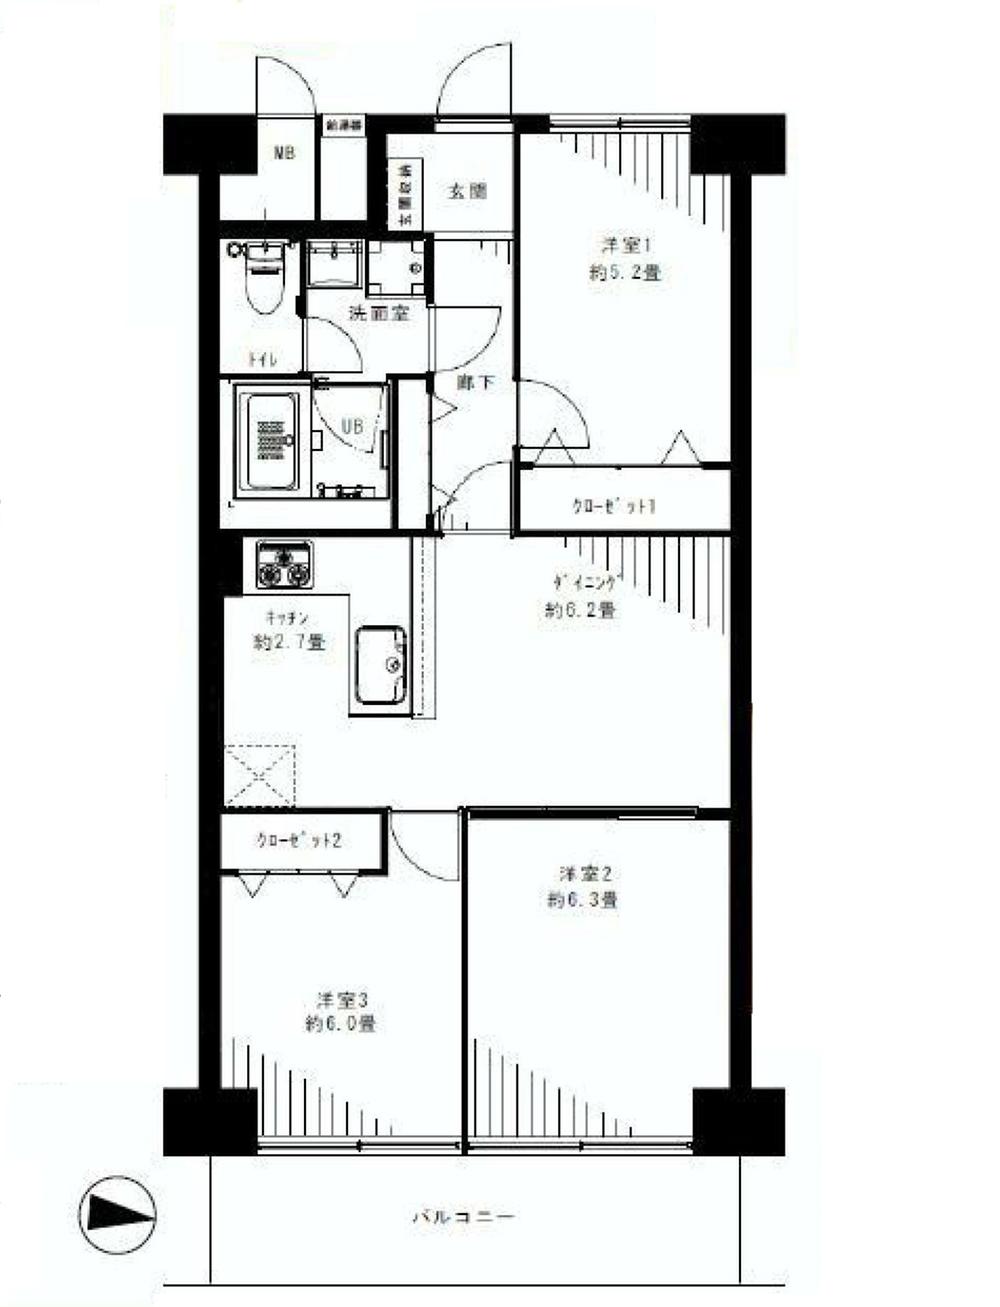 Floor plan. 3DK, Price 17.8 million yen, Footprint 61.6 sq m , Balcony area 7.84 sq m